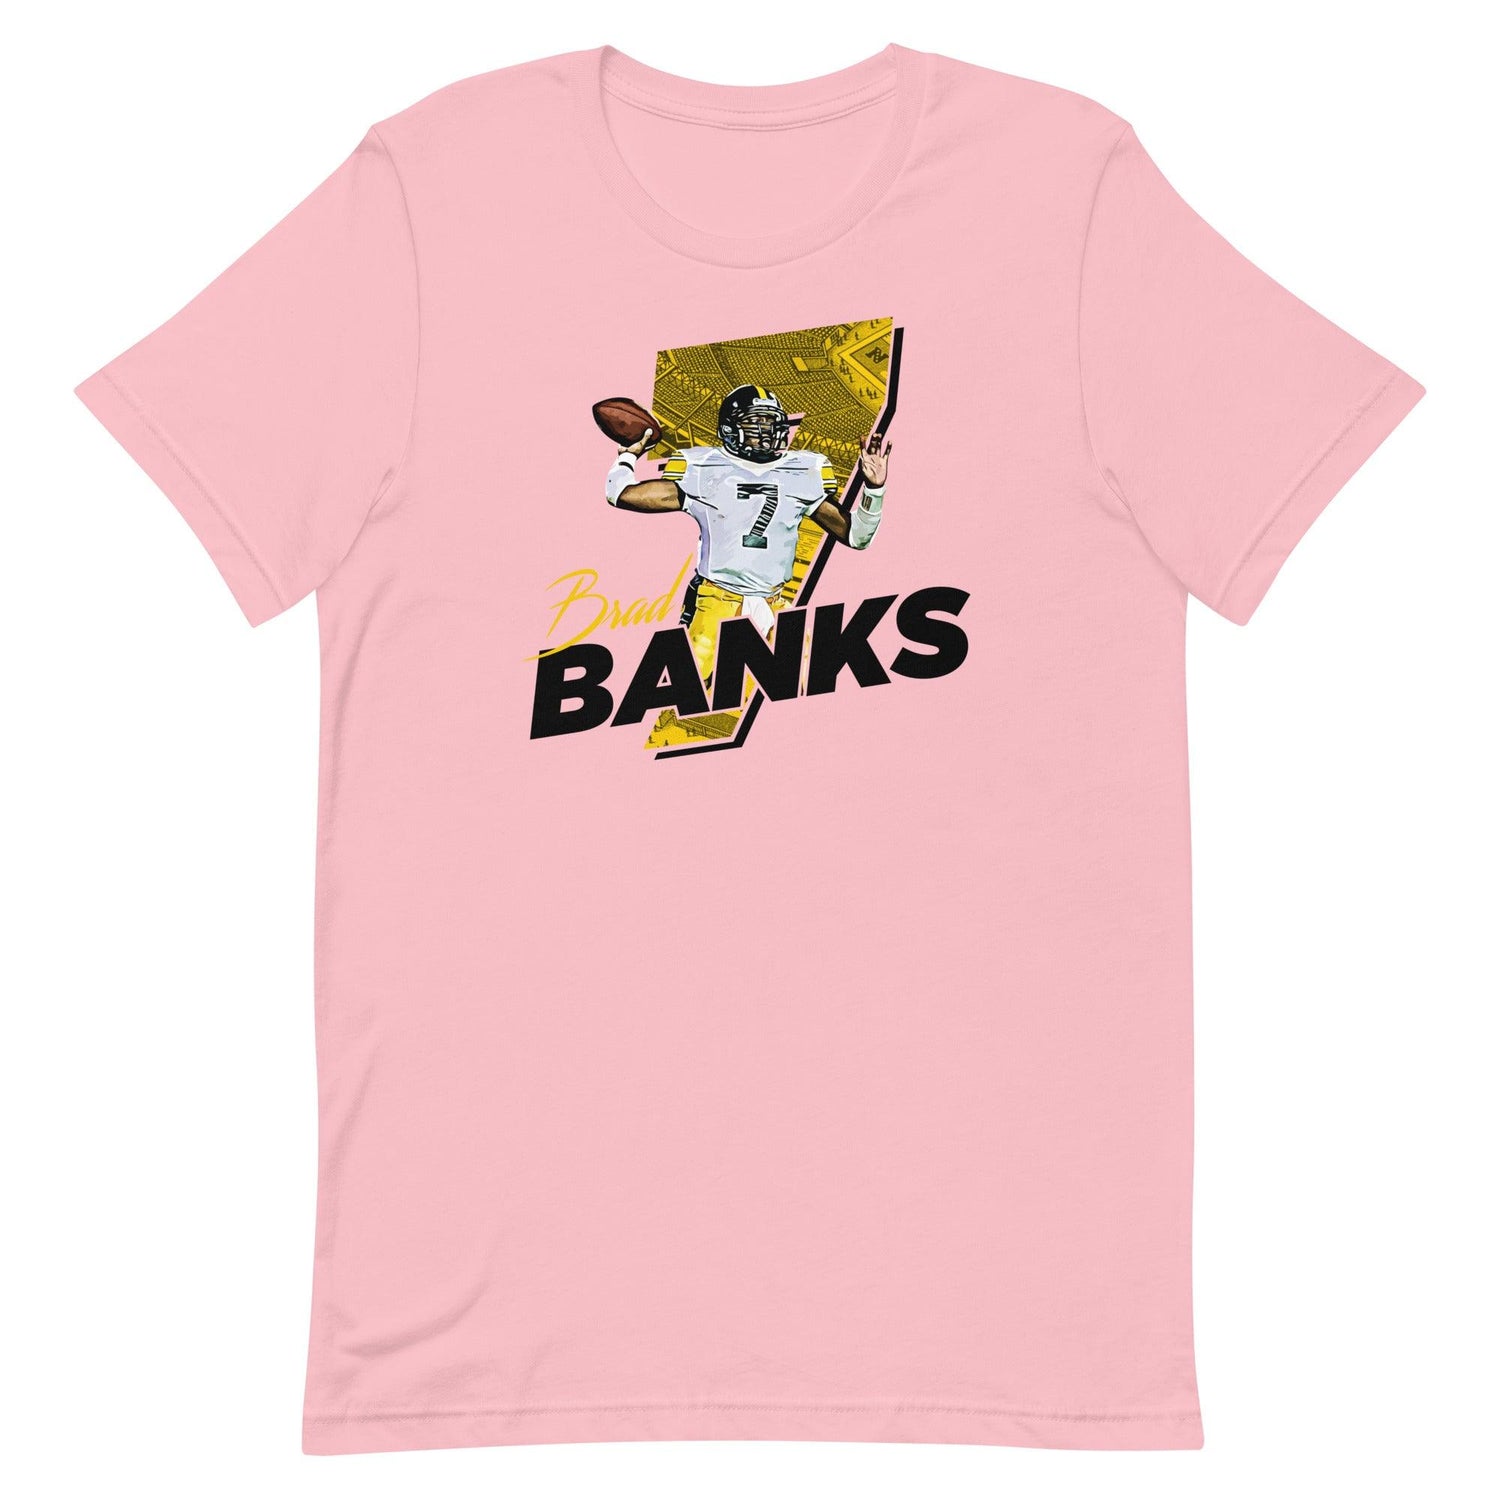 Brad Banks "Throwback" t-shirt - Fan Arch